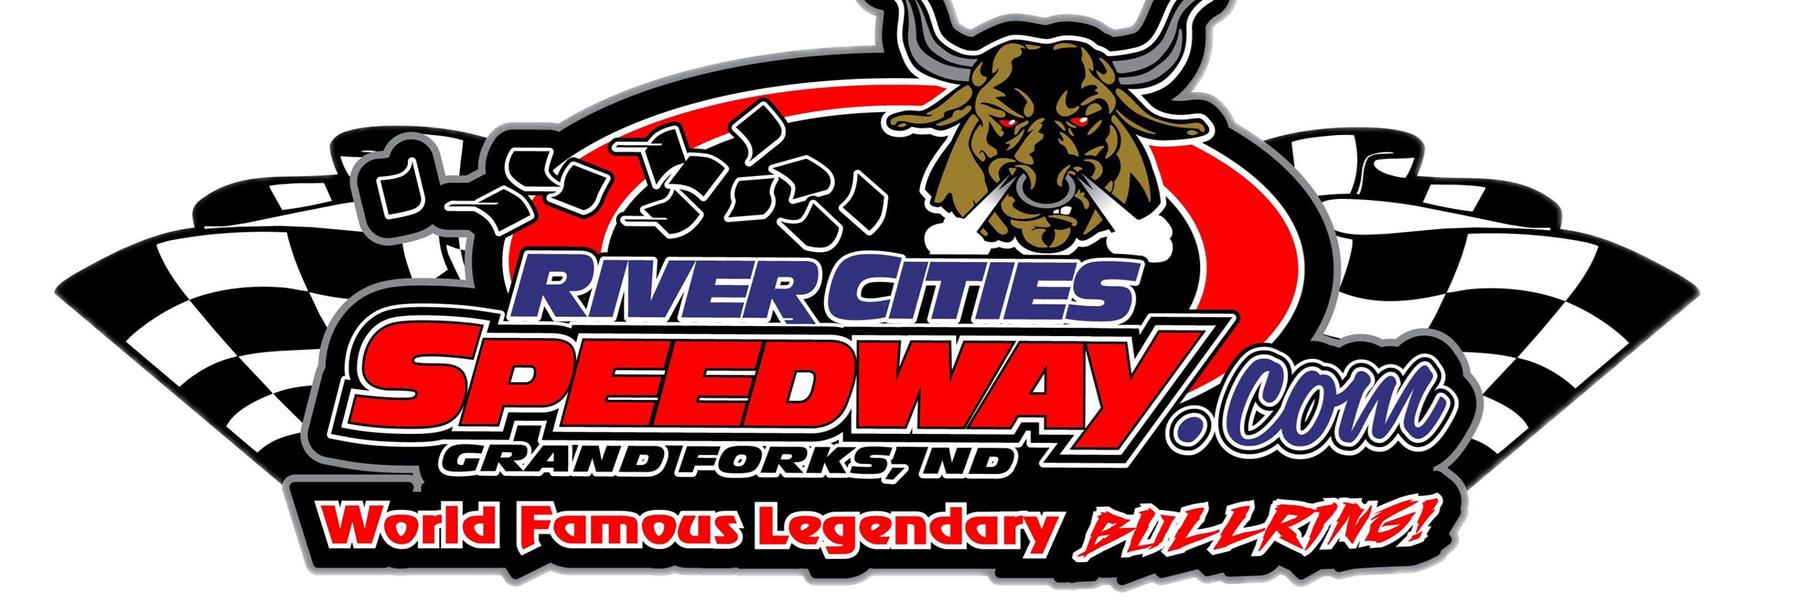 7/16/2022 - River Cities Speedway